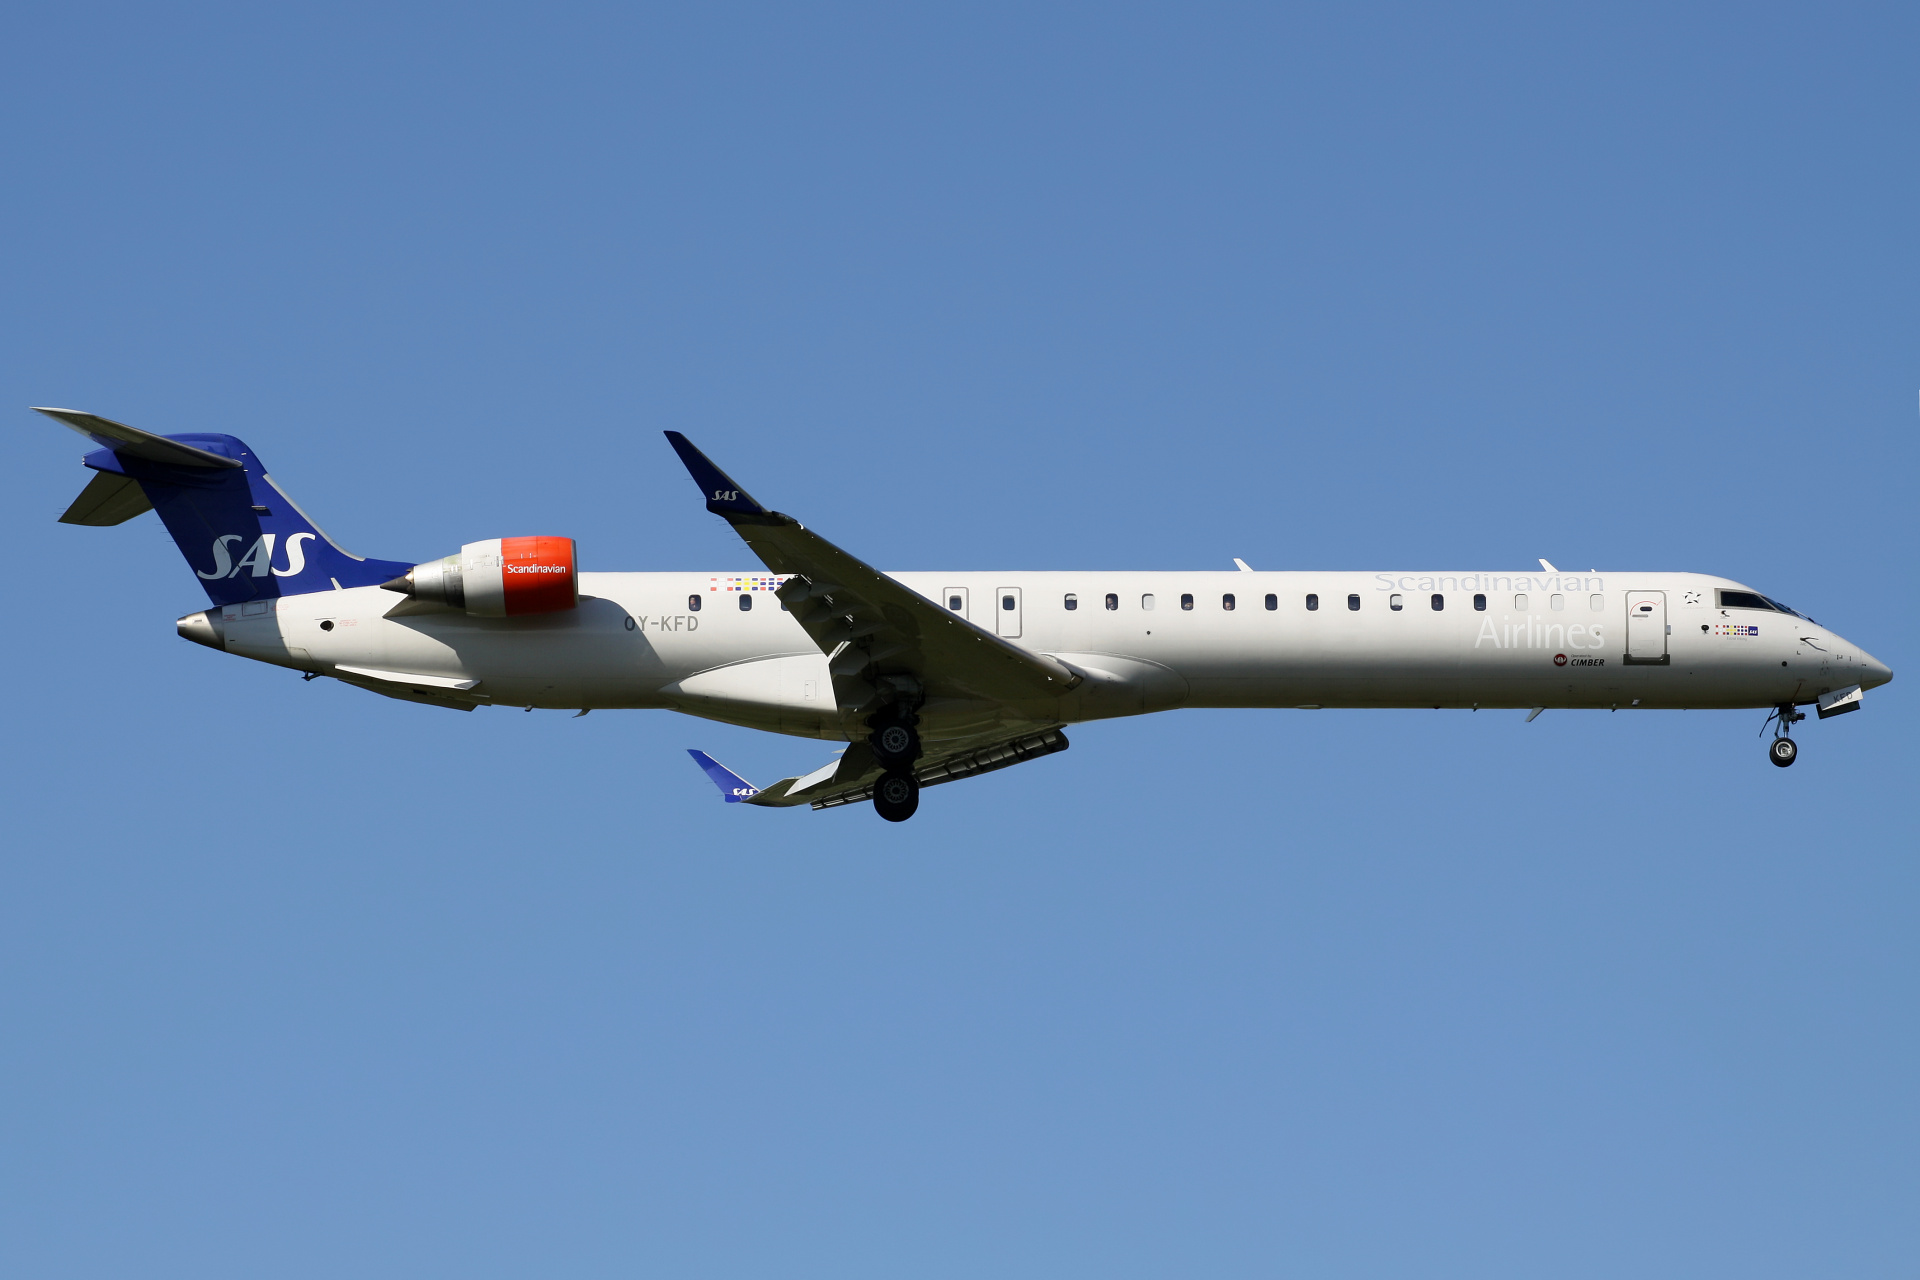 OY-KFD (Cimber Air) (Aircraft » EPWA Spotting » Mitsubishi Regional Jet » CRJ-900 » SAS Scandinavian Airlines)